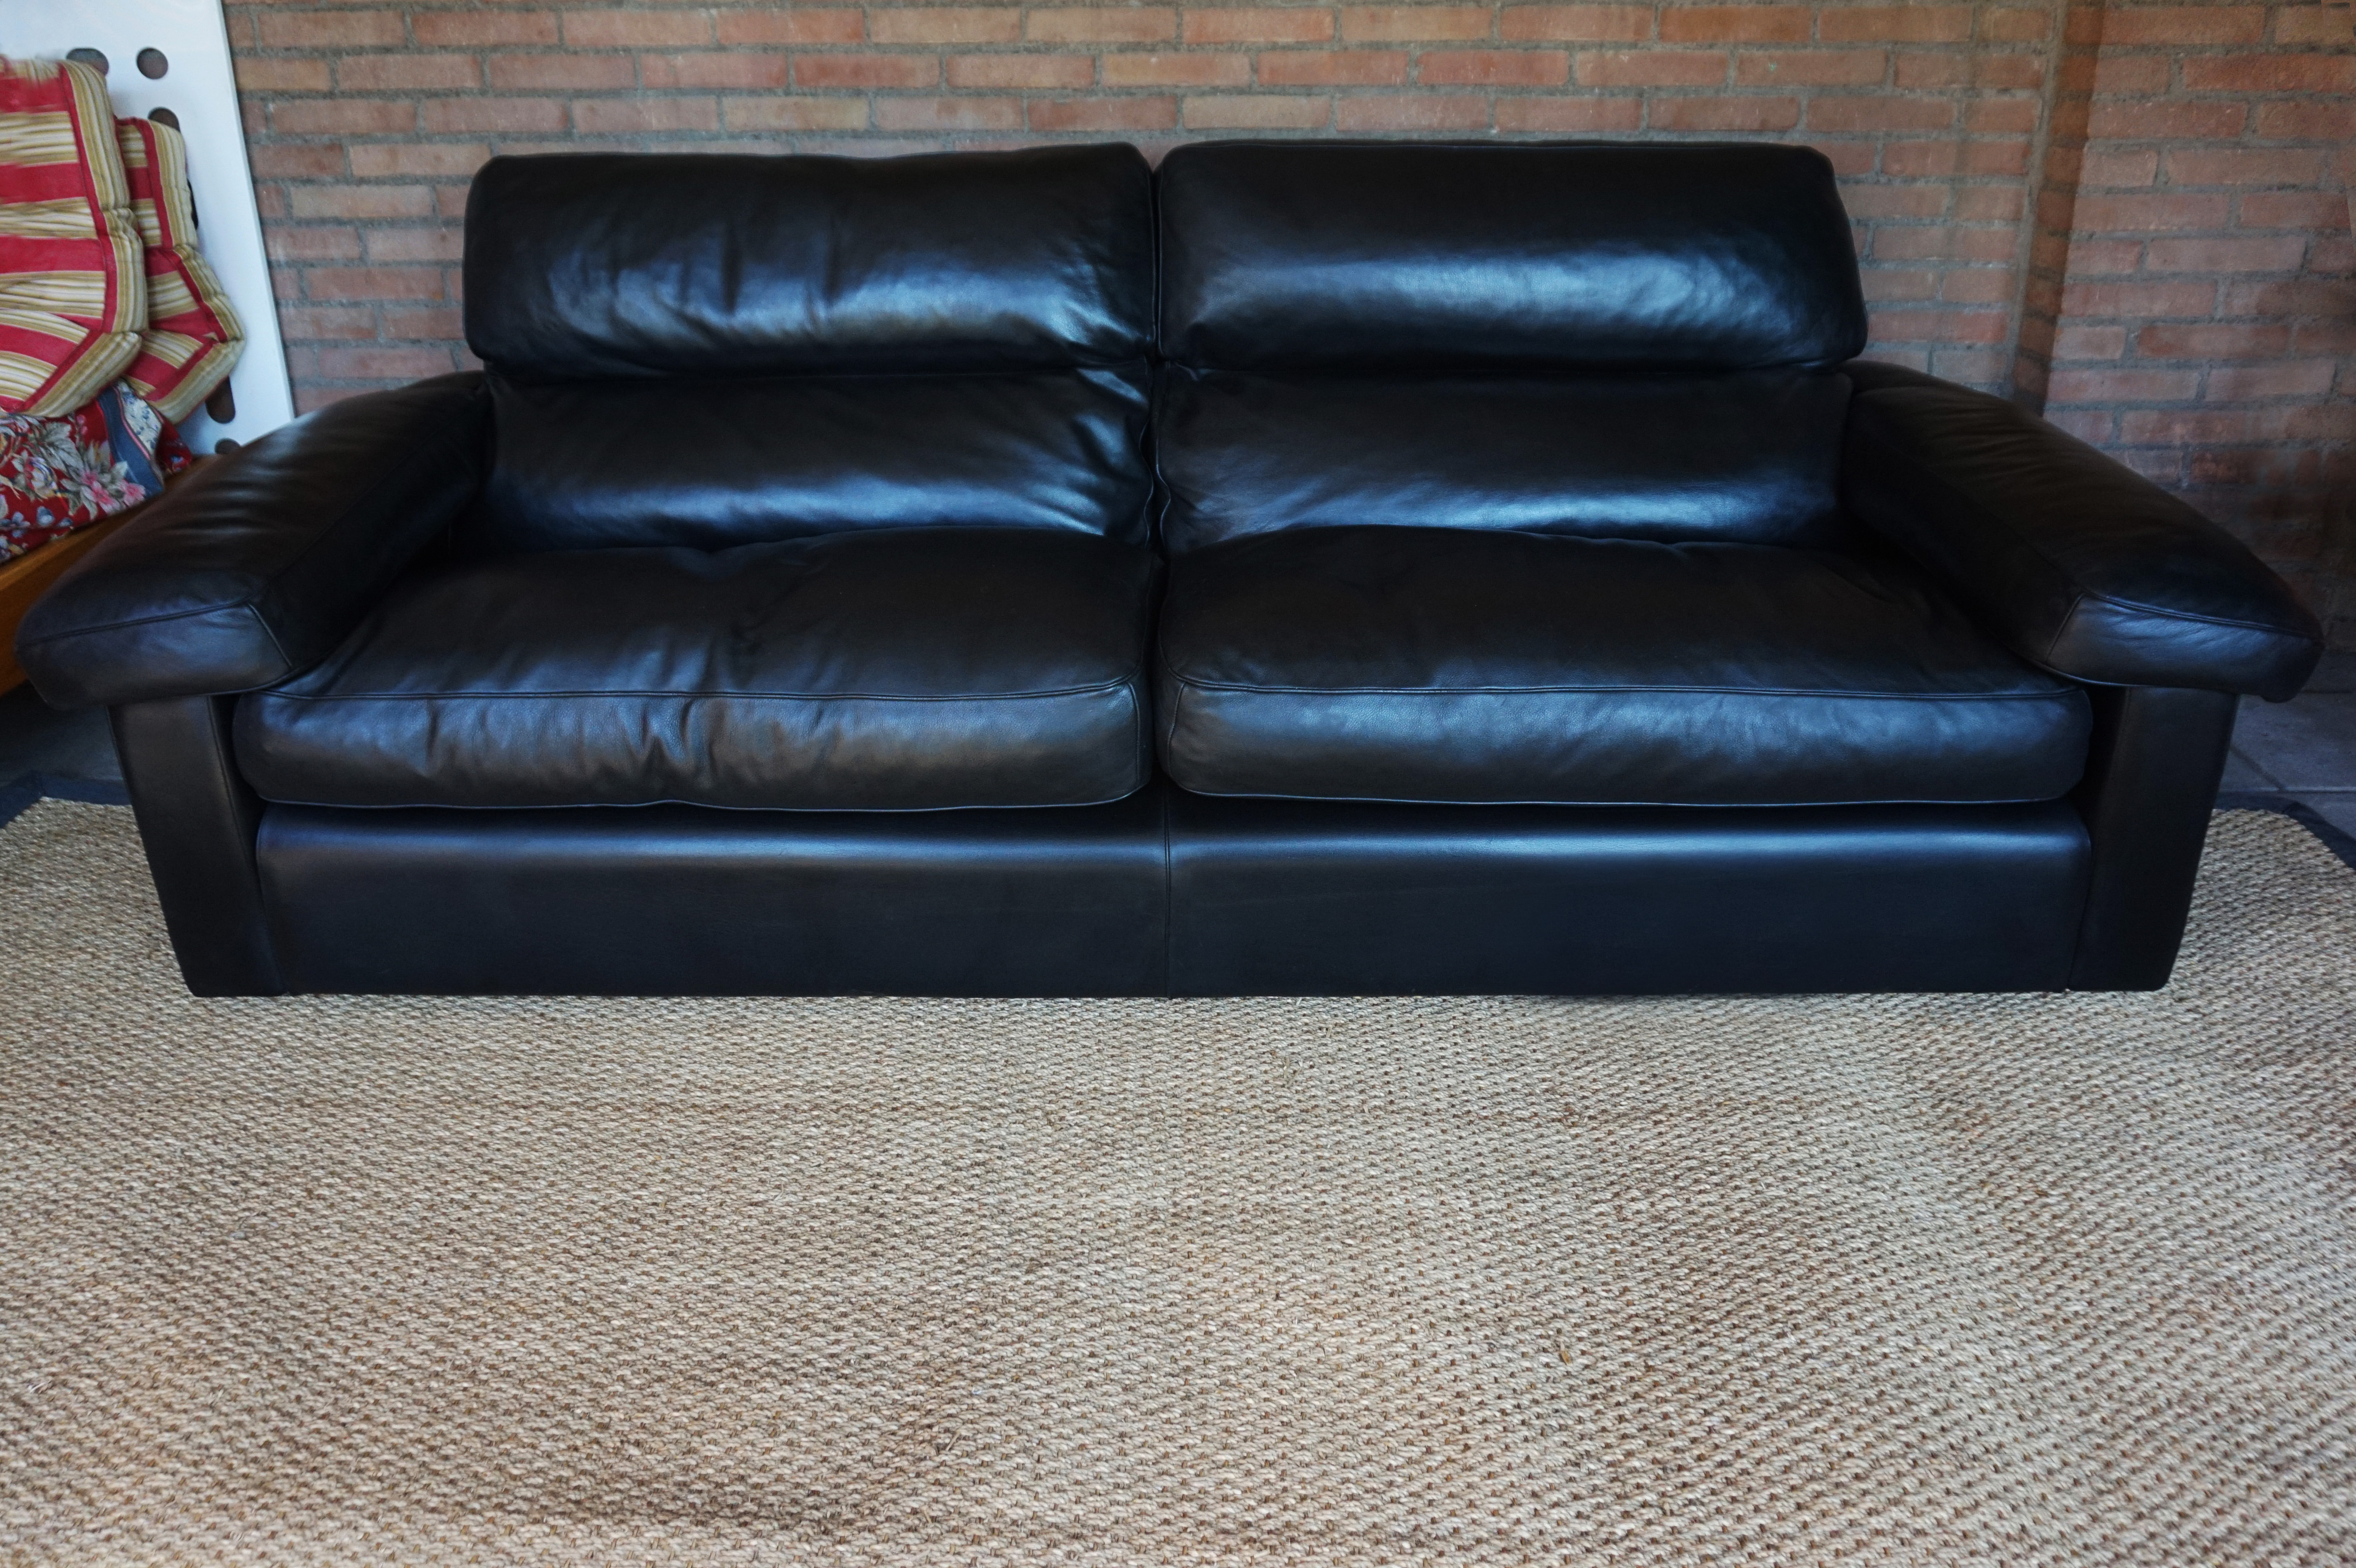 Tito Agnoli for Poltrona Frau leather 2-seat sofa, bank, vintage